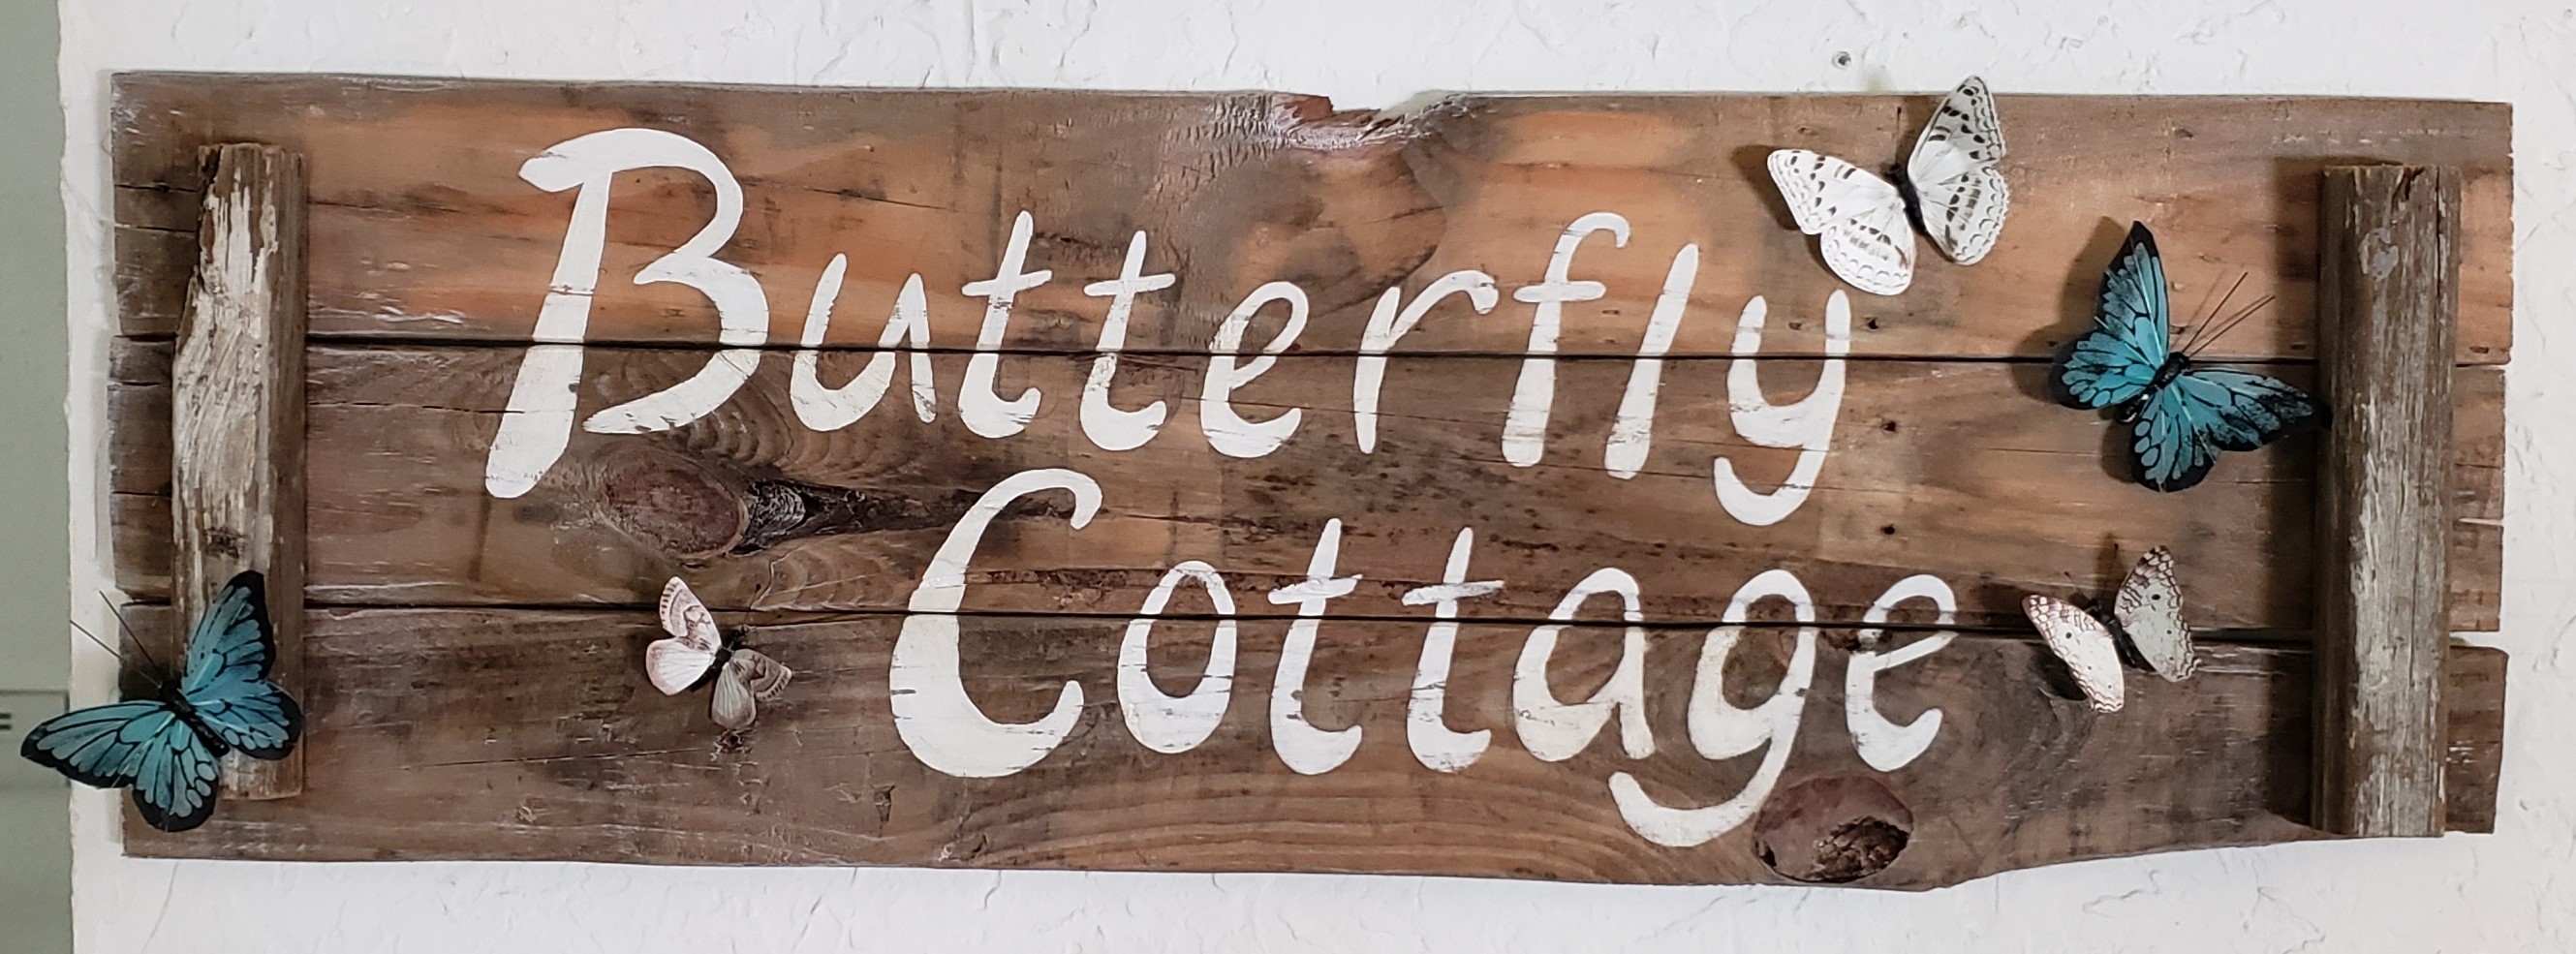 Butterfly Cottage logo.jpg